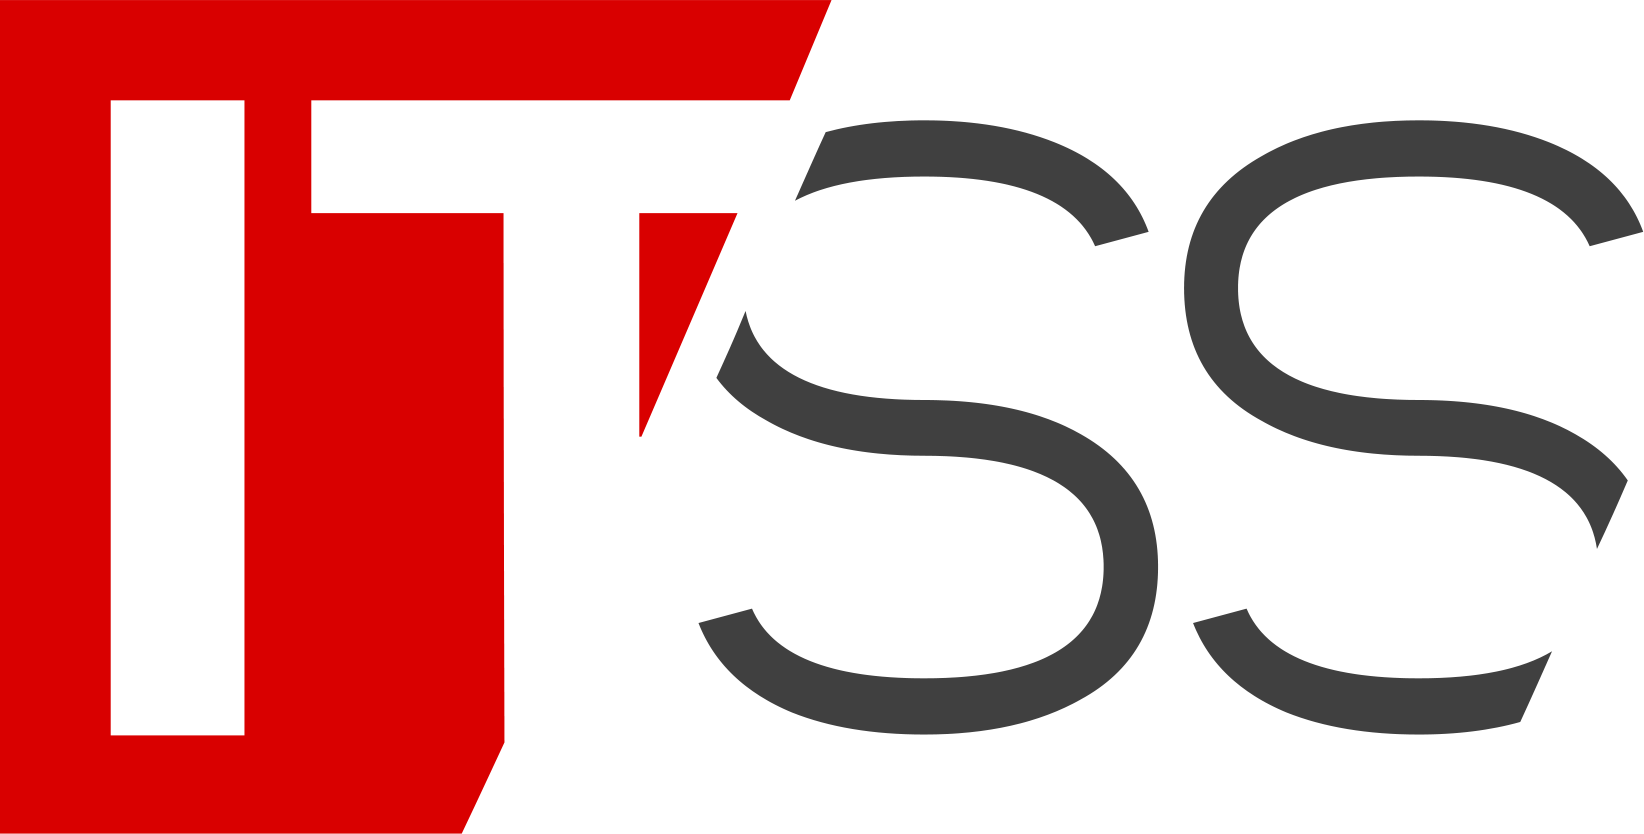 ITSS Logo on White Background